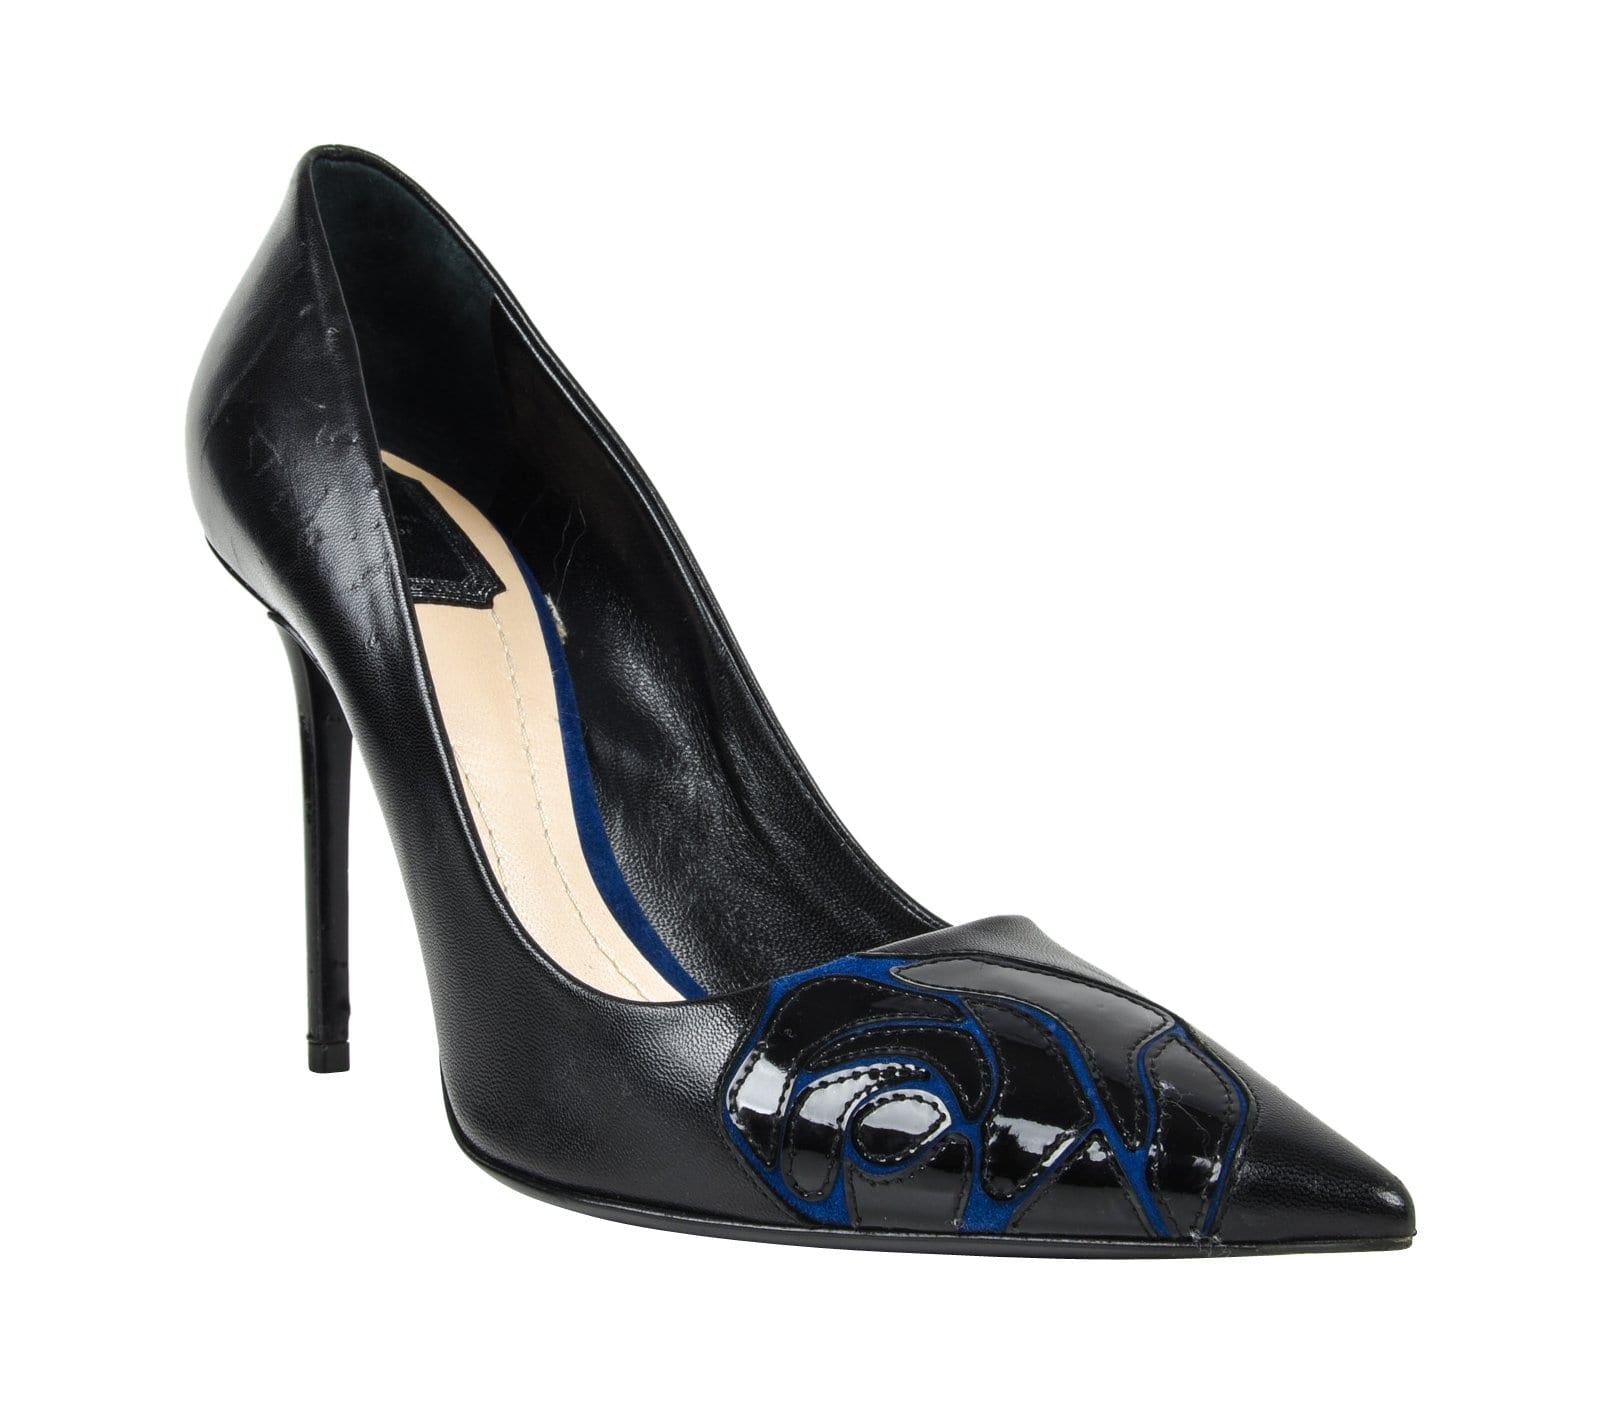 Christian Dior Shoe Black Pump Rose Applique Detail 39.5 / 9.5 - mightychic